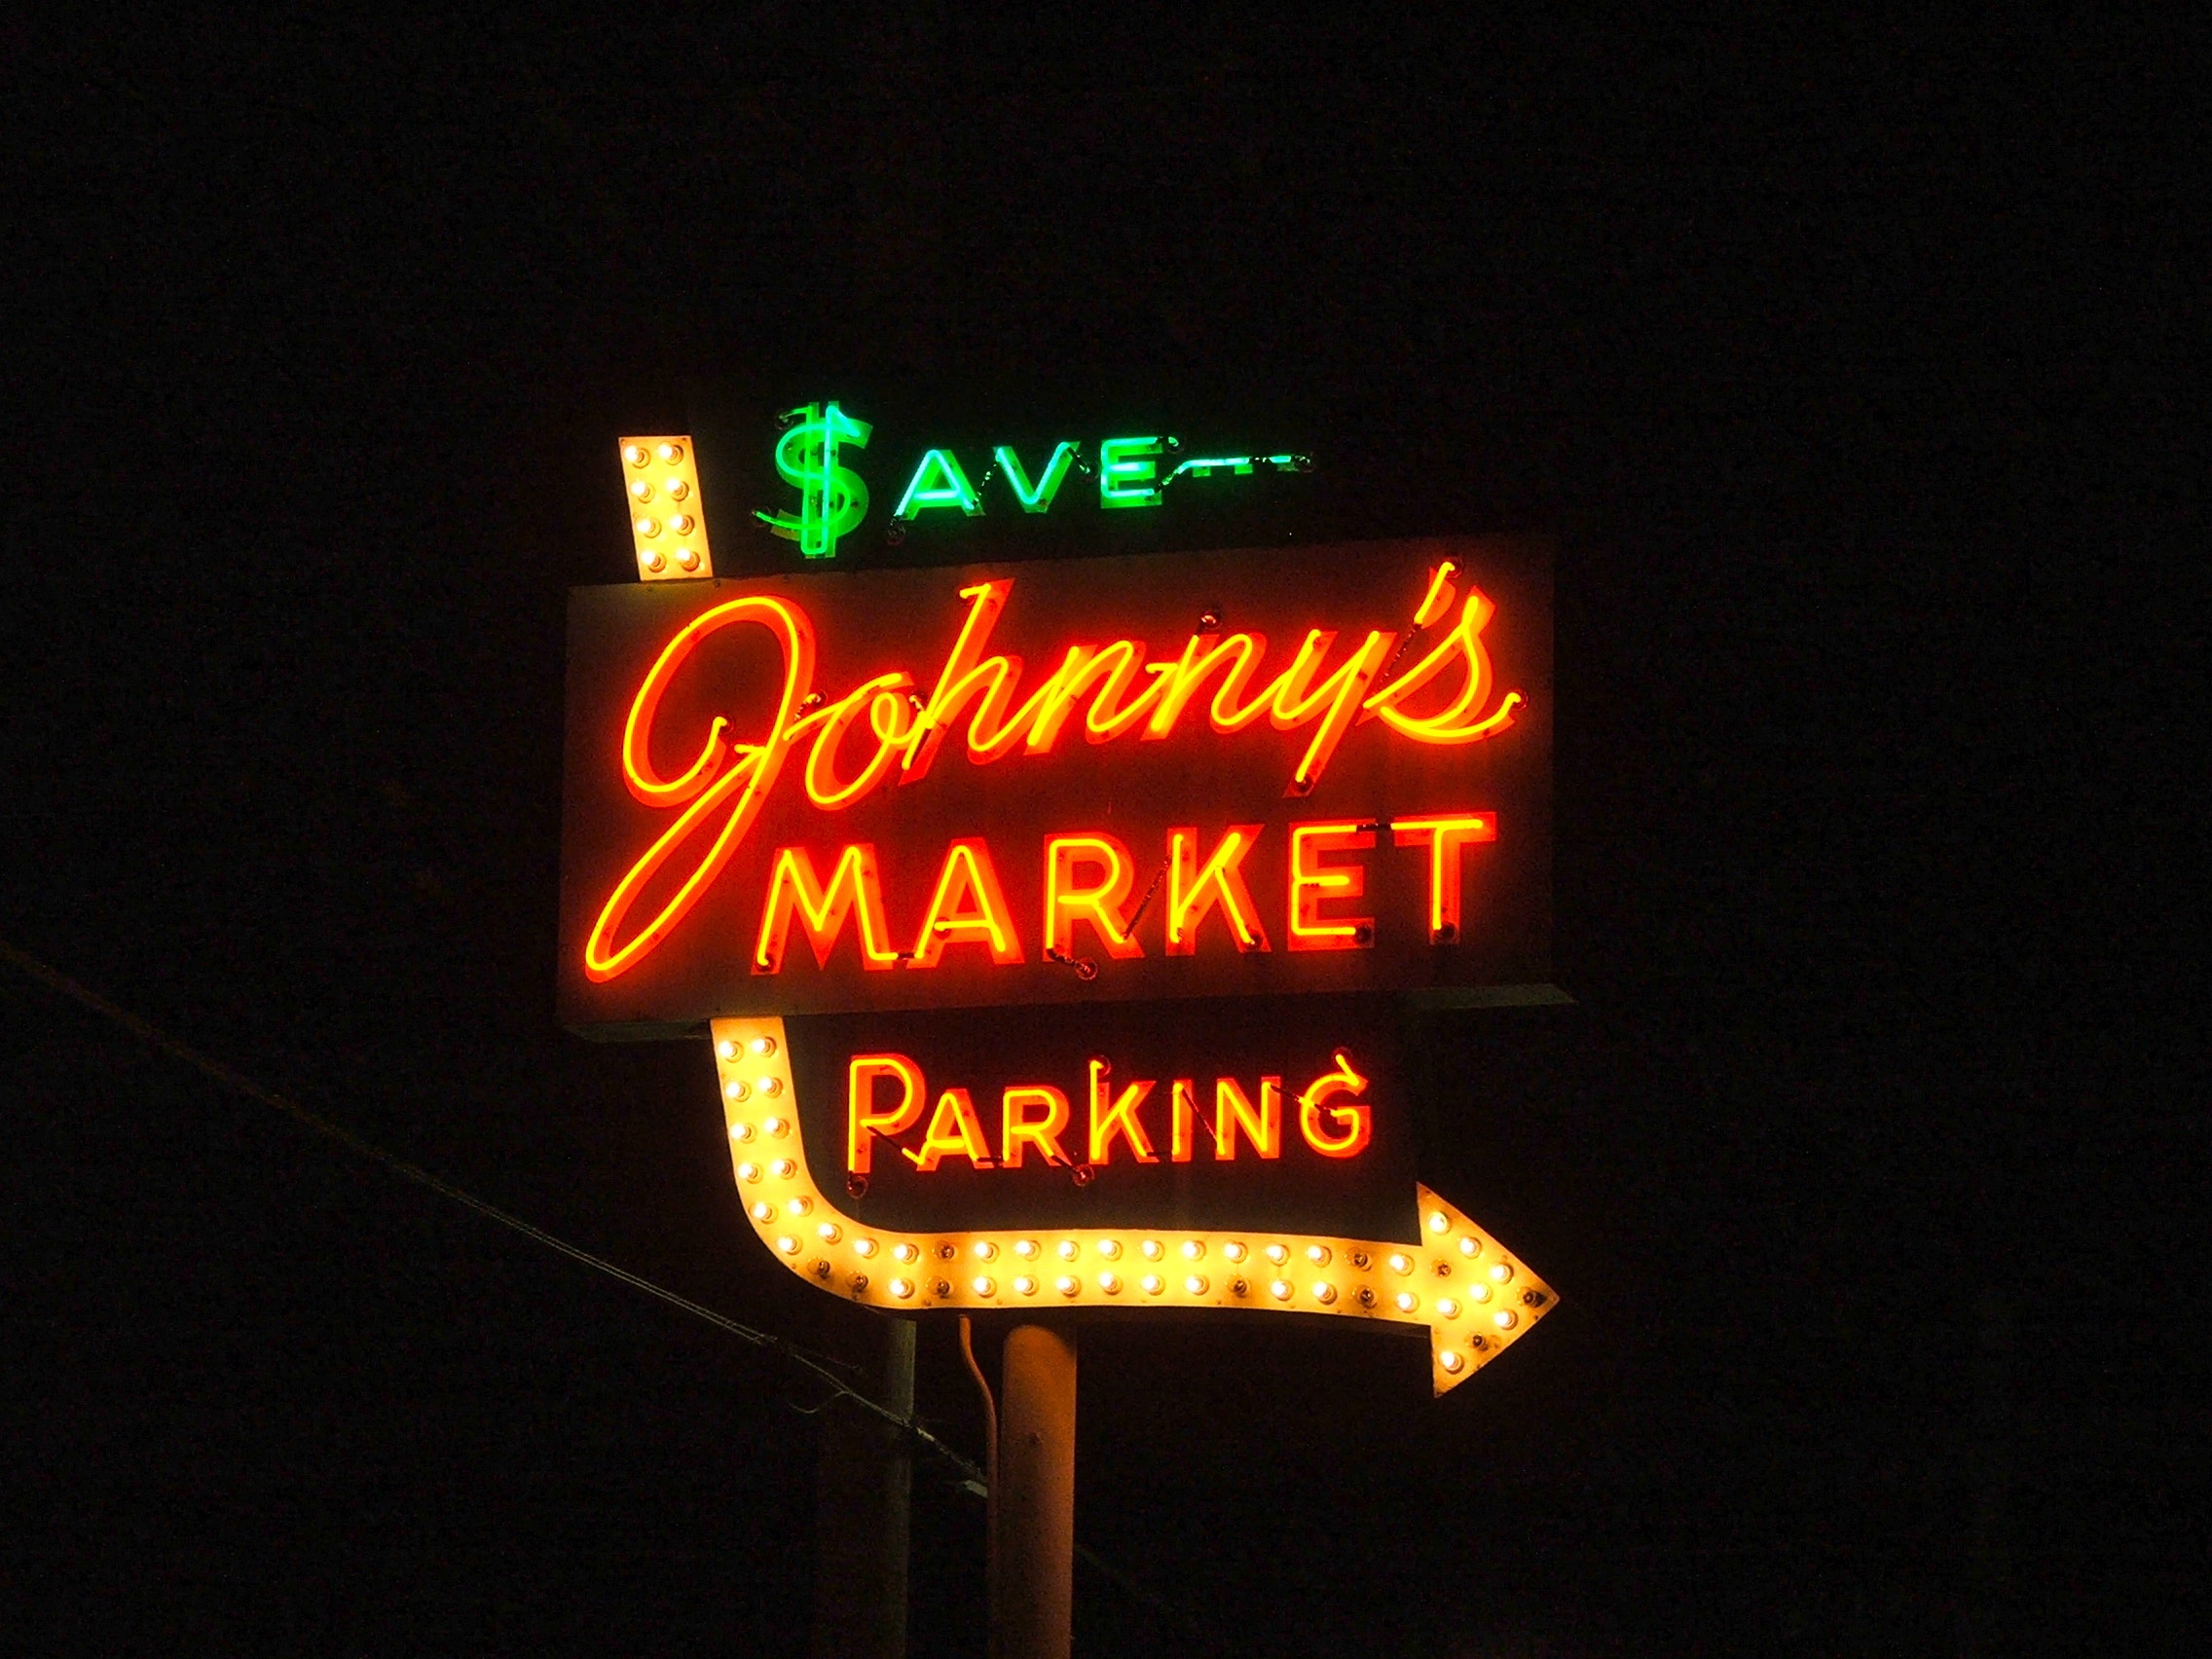 Johnny's Market - 11555 Gravois Road, Saint Louis, Missouri U.S.A. - May 3, 2008